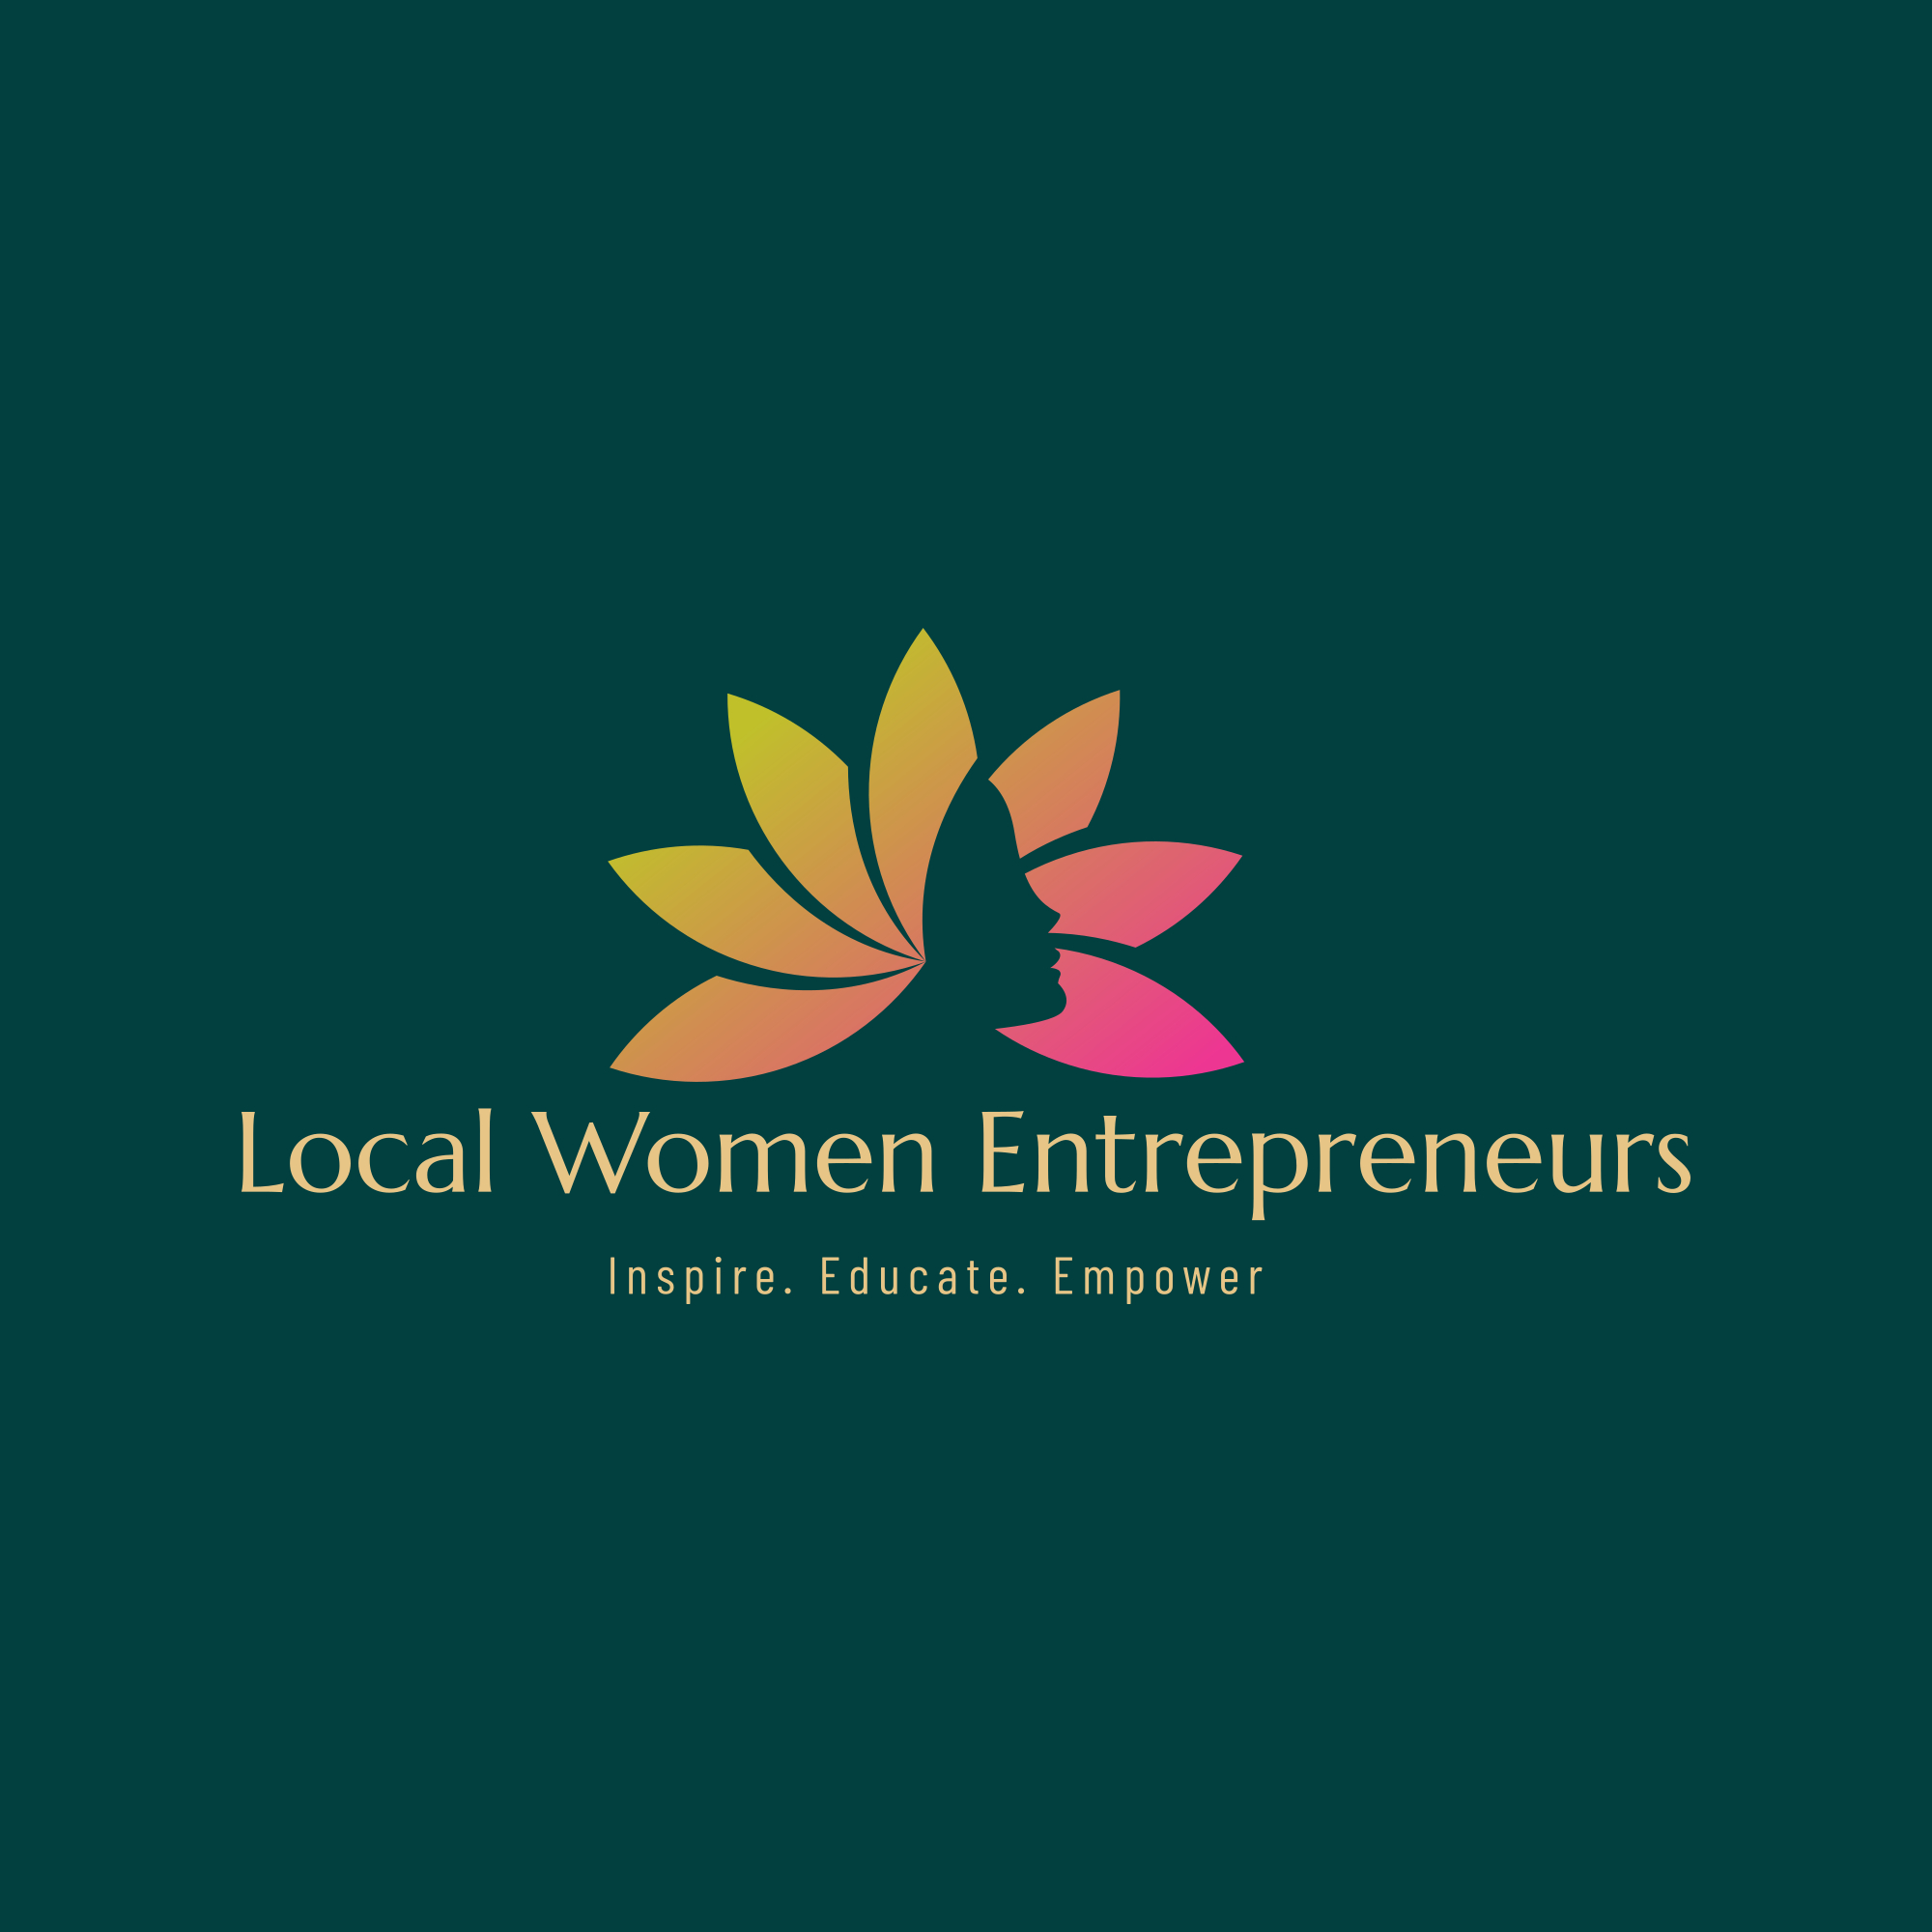 Local Women Entrepreneurs